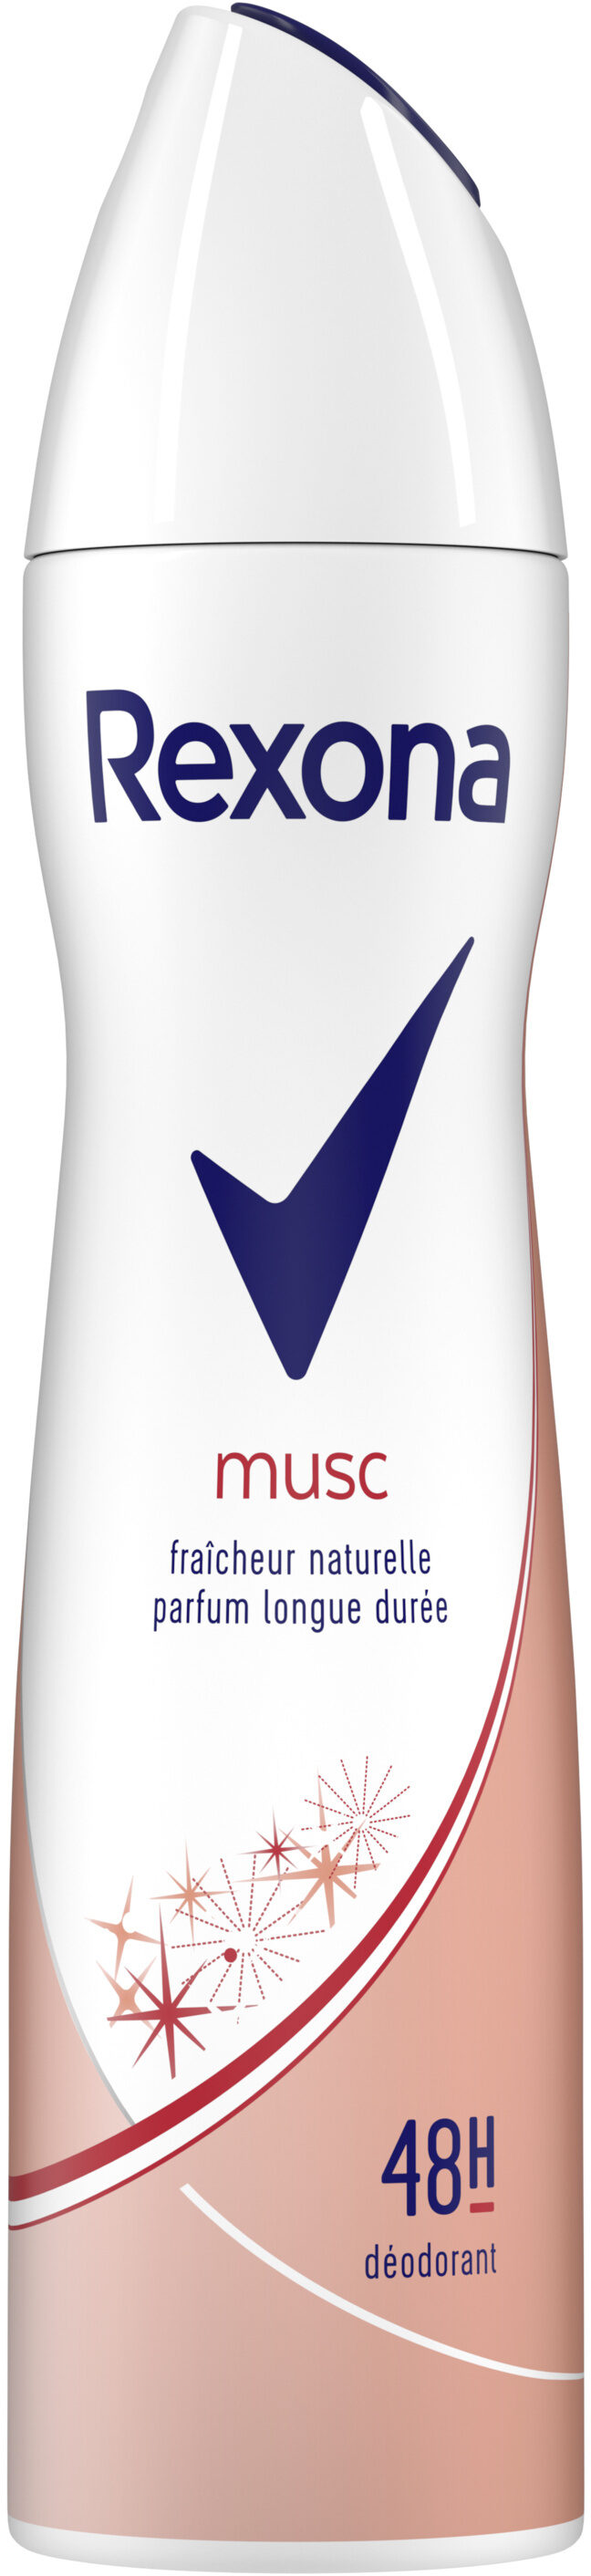 Rexona Déodorant Femme Spray Musc Fraîcheur Naturelle 200ml - Produit - fr